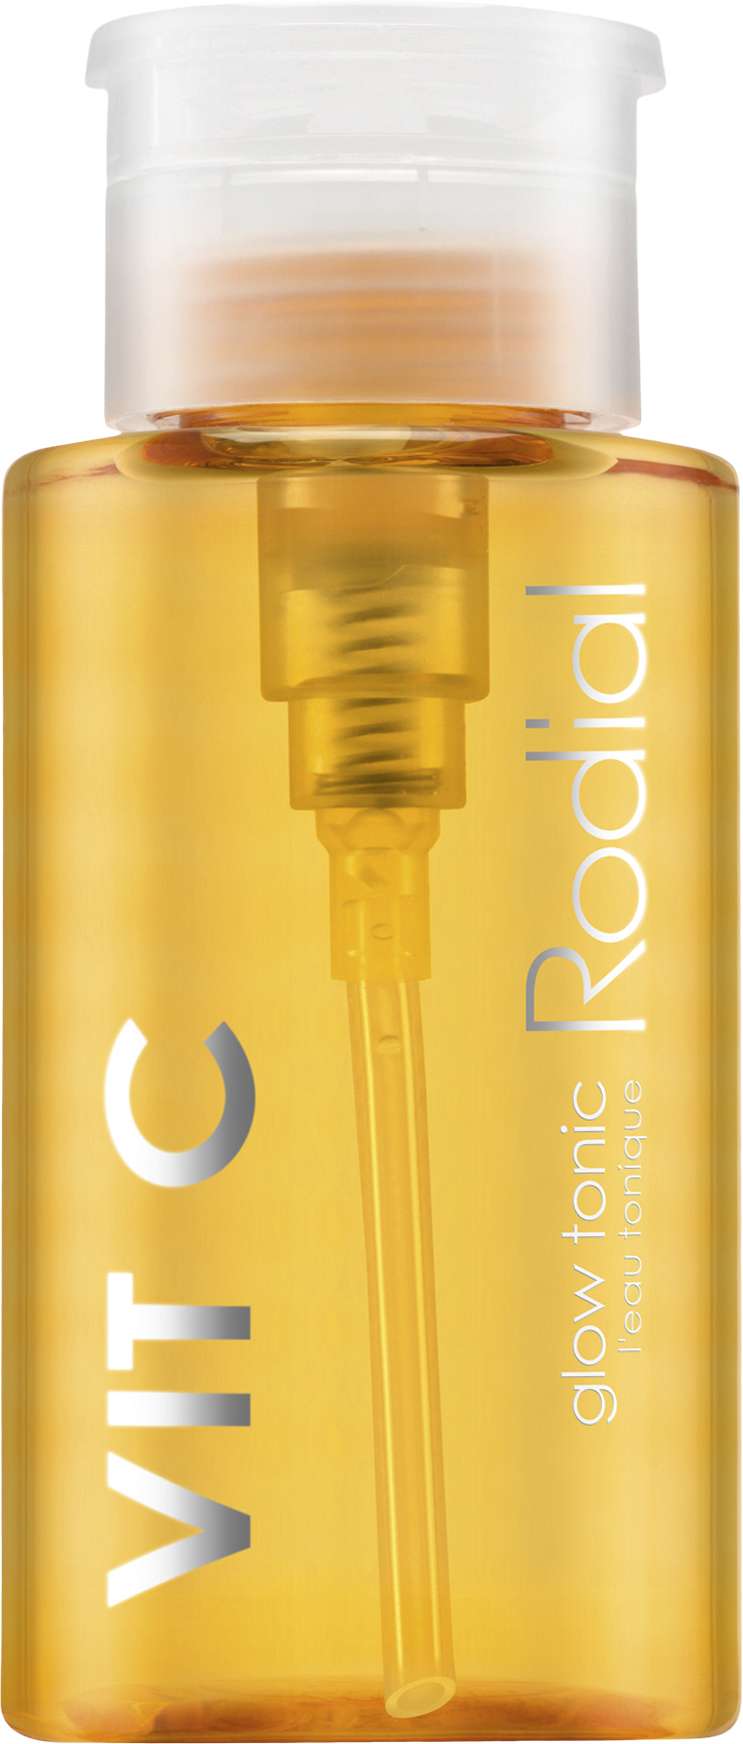 ​Rodial - Vit C Glow Tonic 200 ml